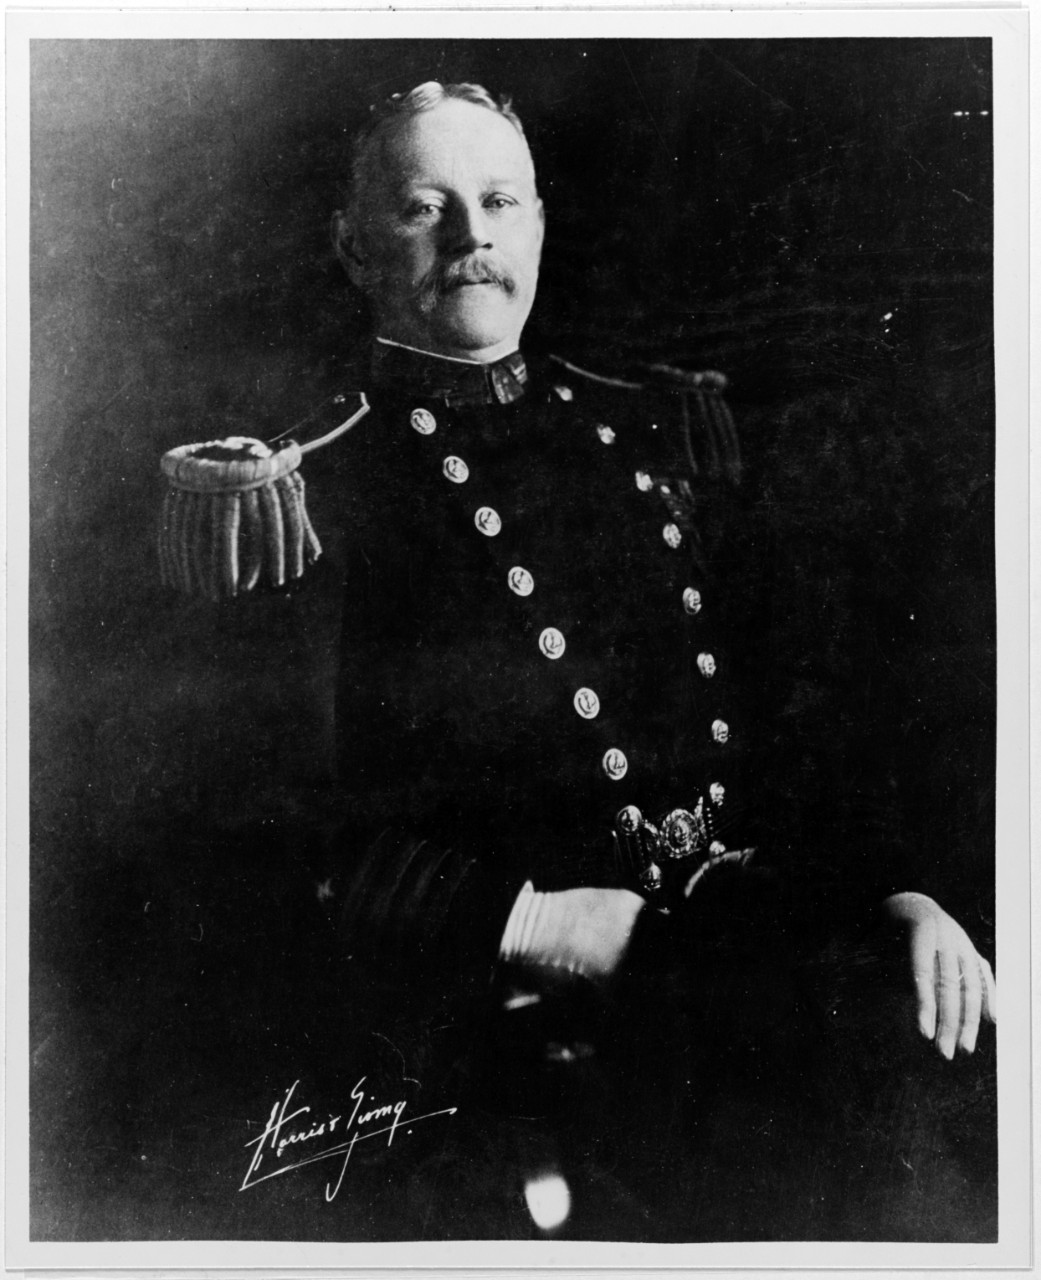 Captain Templin M. Potts, USN